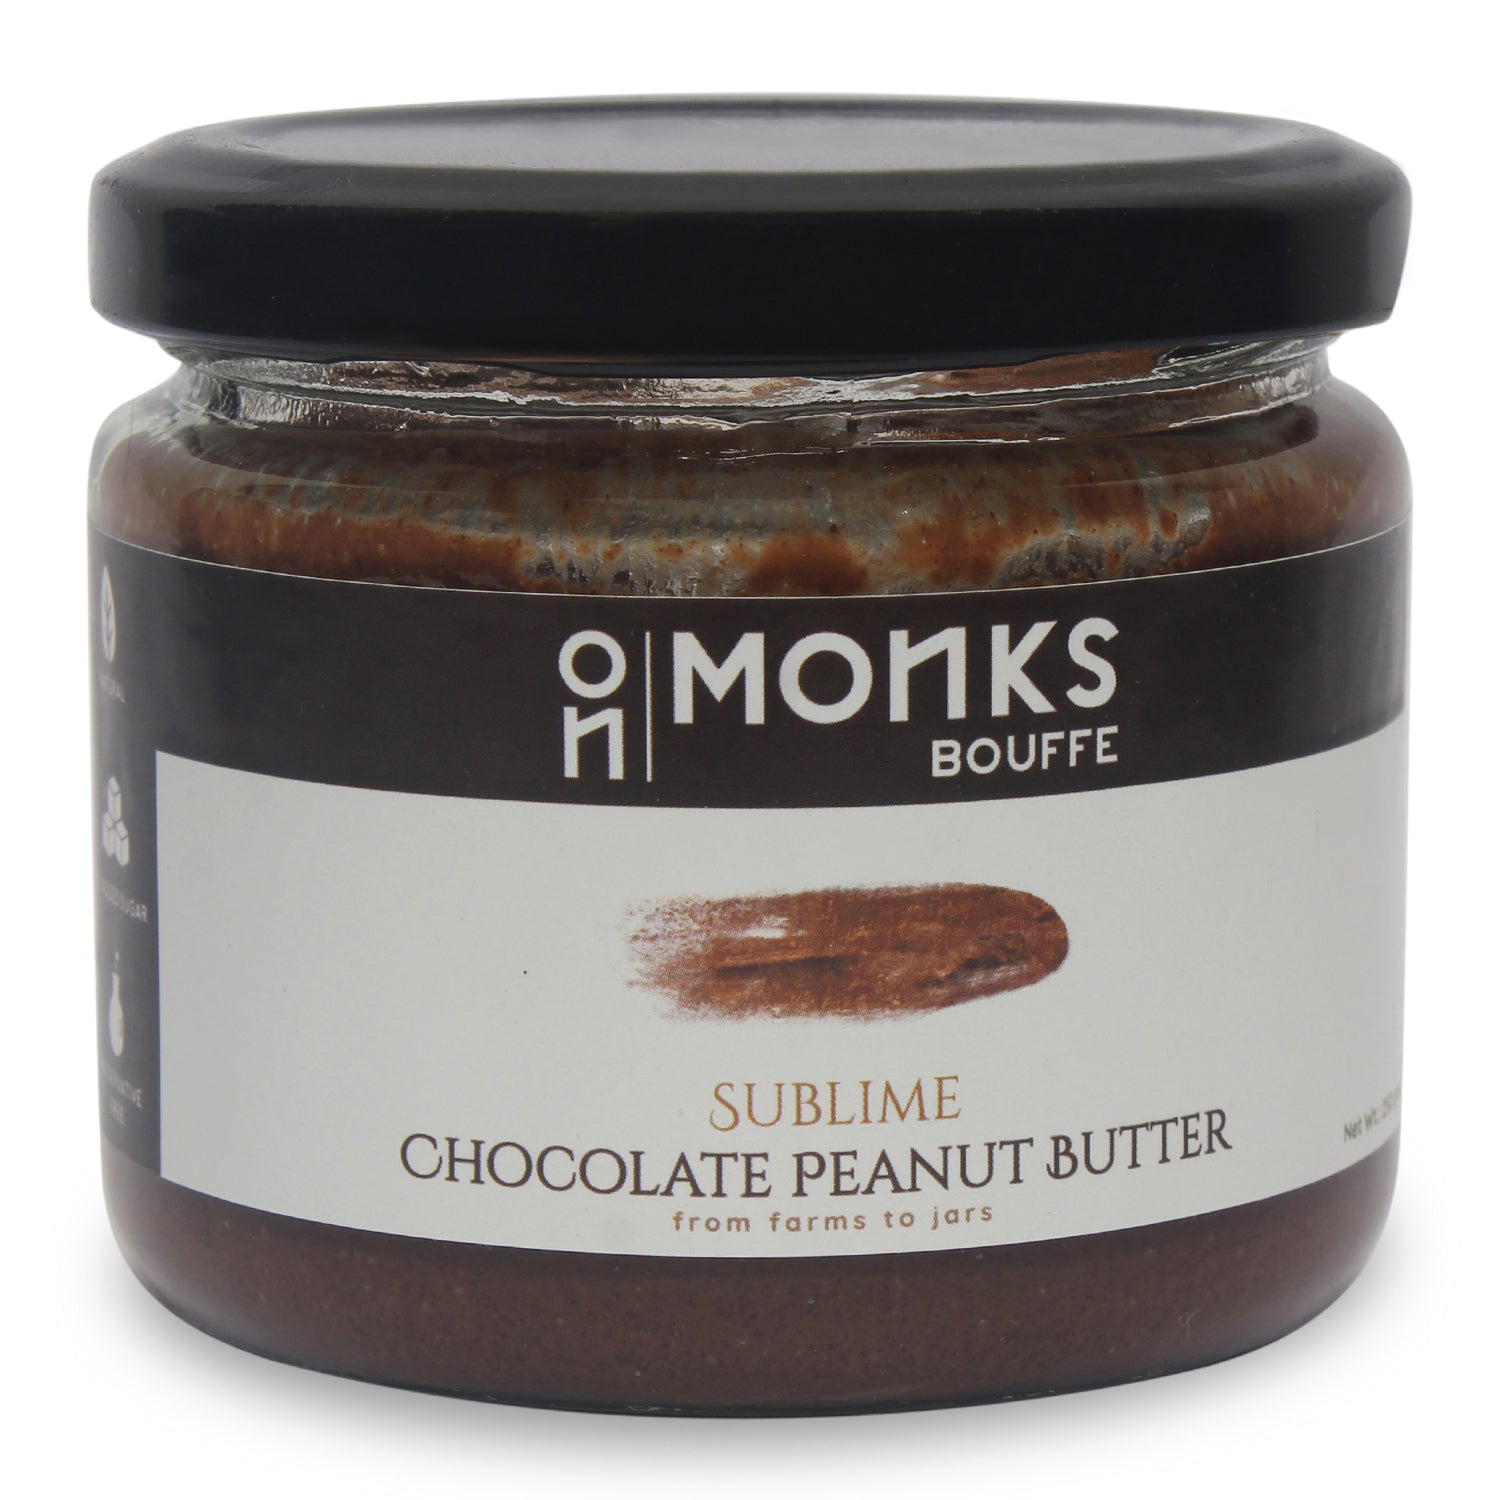 Sublime Chocolate Peanut Butter - Monks Bouffe